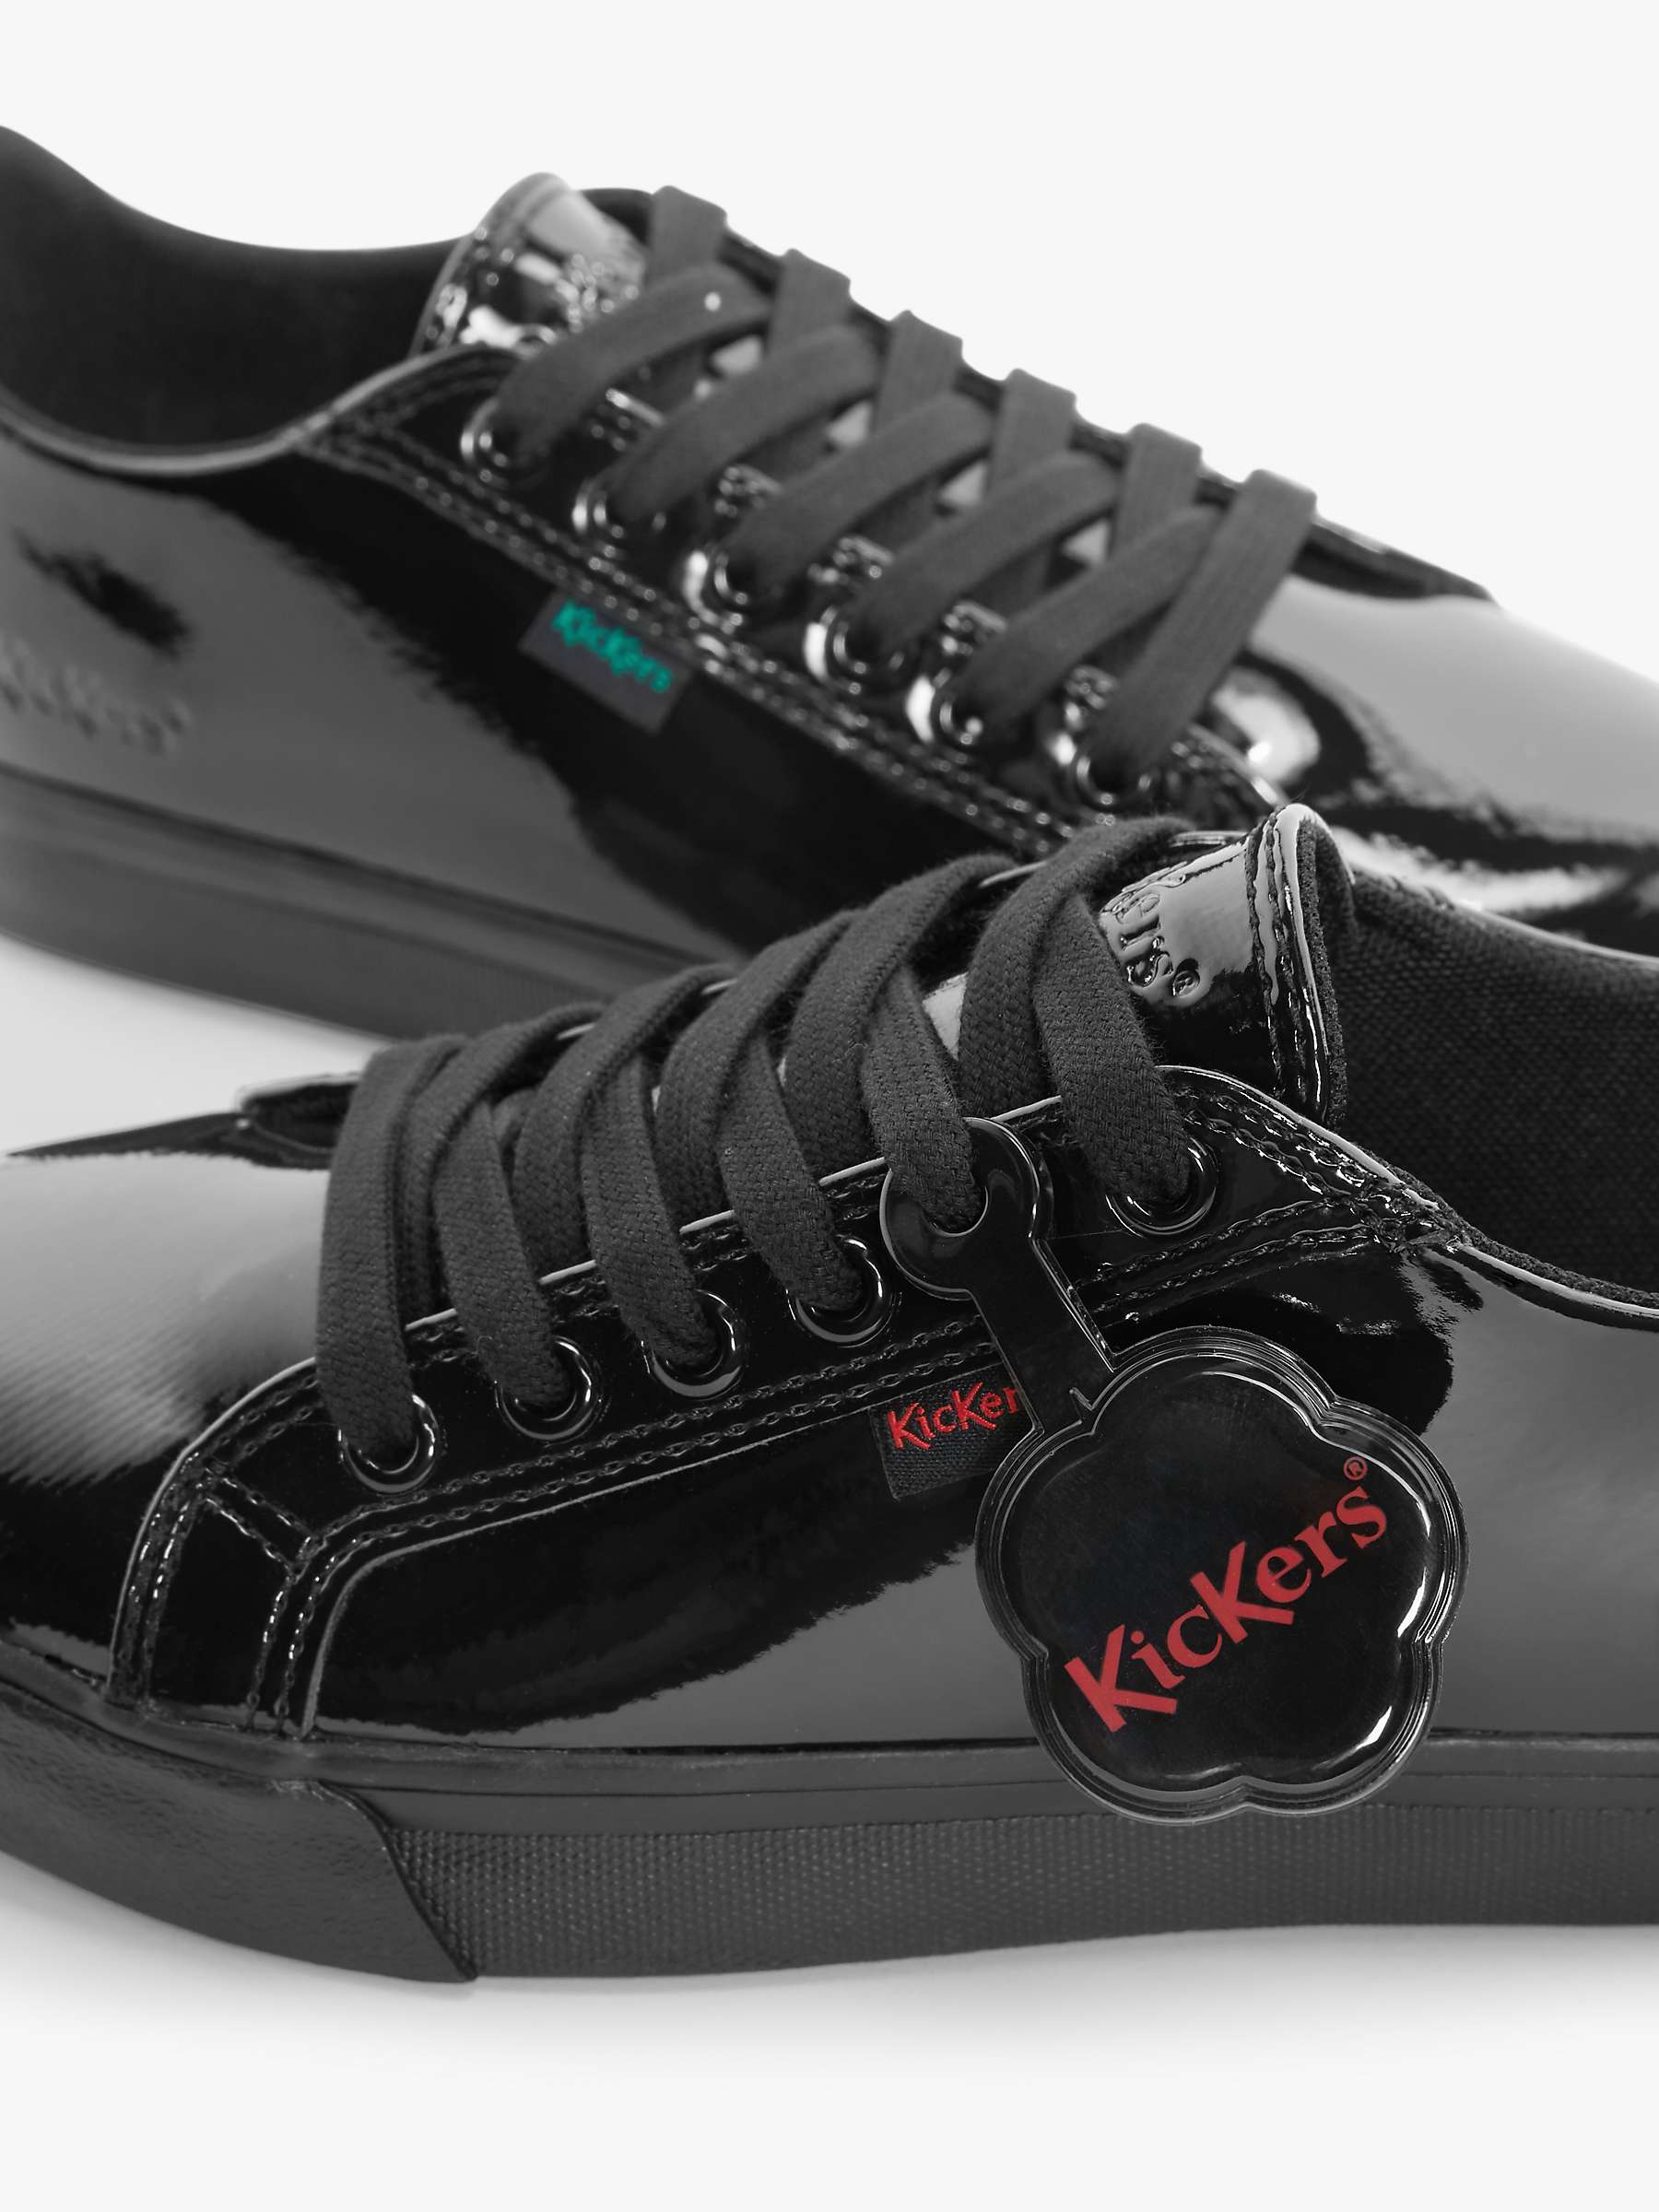 Kickers Unisex's Tovni Hi School Uniform Shoe